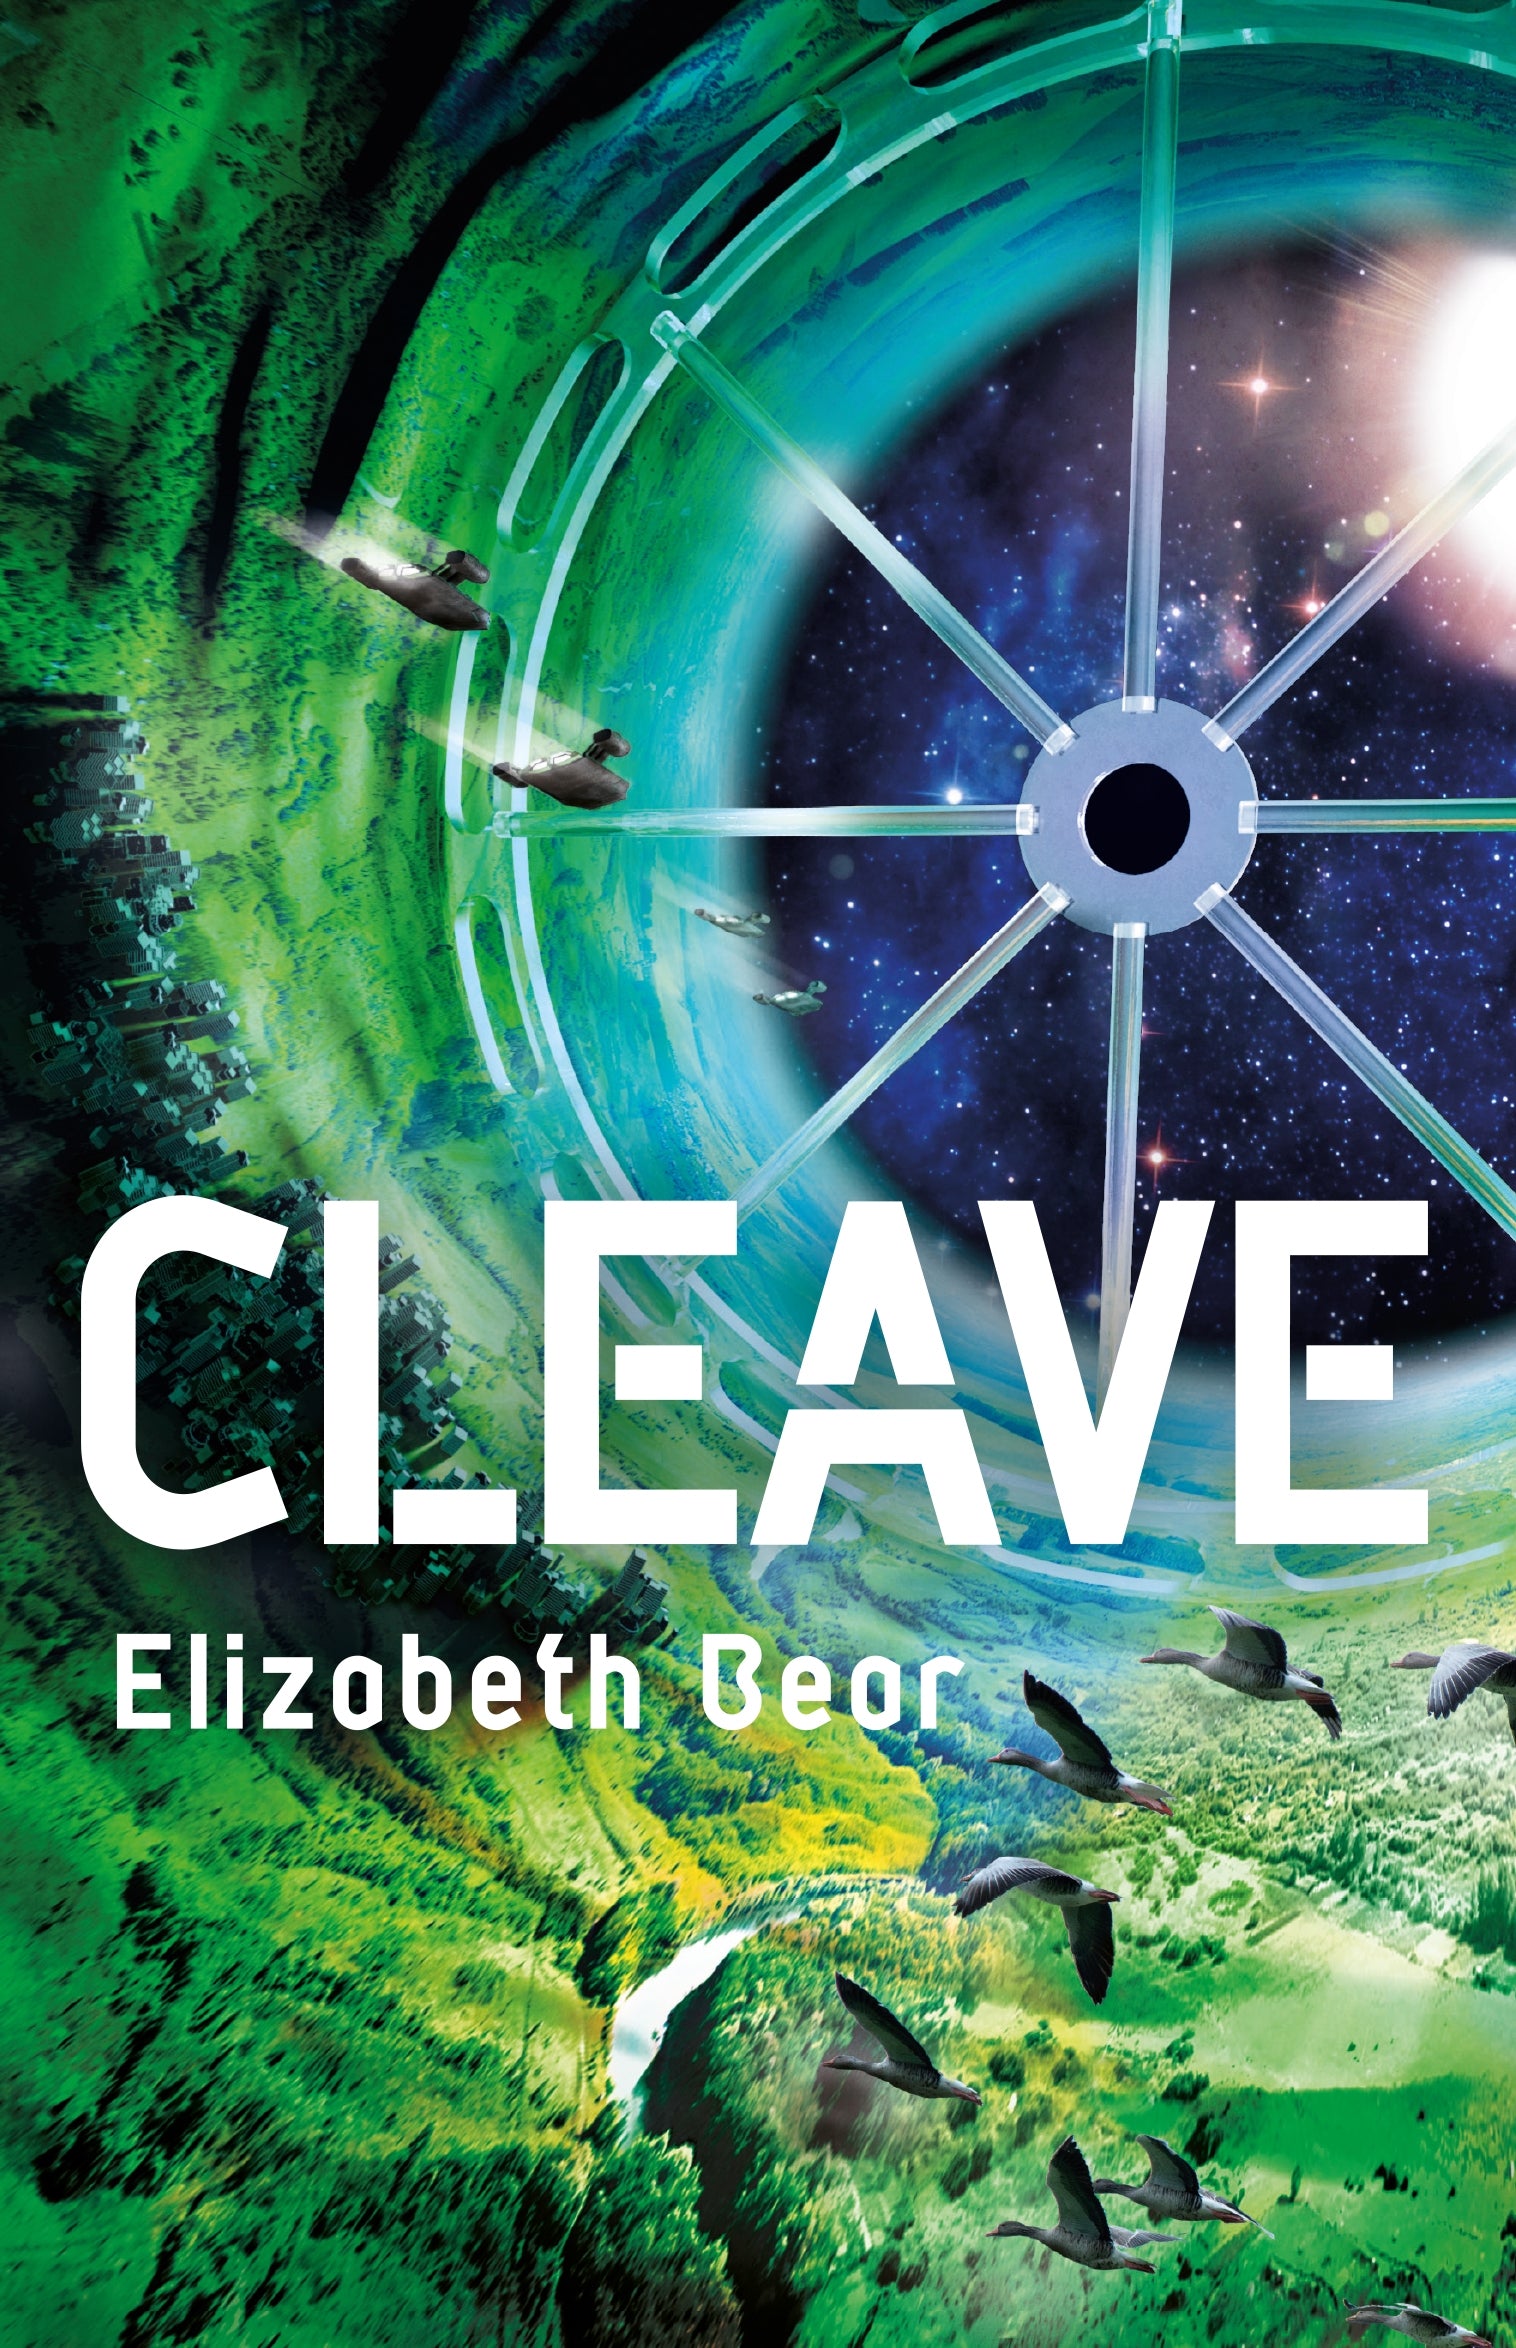 Cleave by Elizabeth Bear